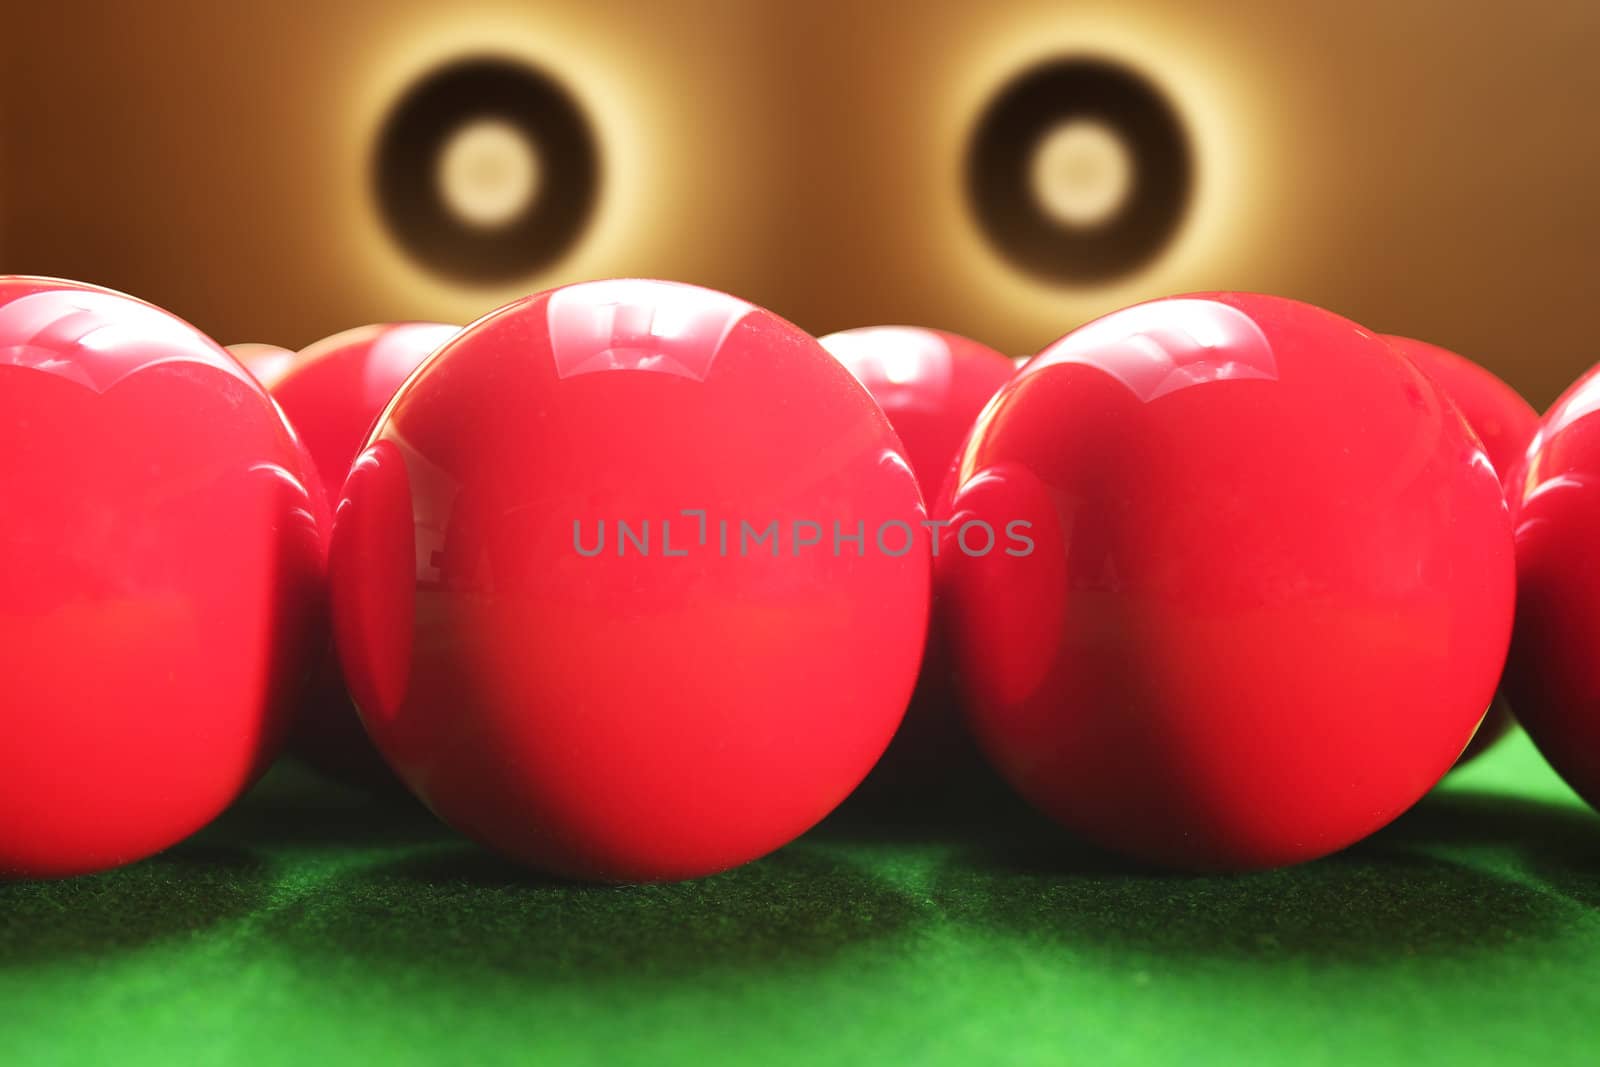 Snooker balls and background lights by mnsanthoshkumar